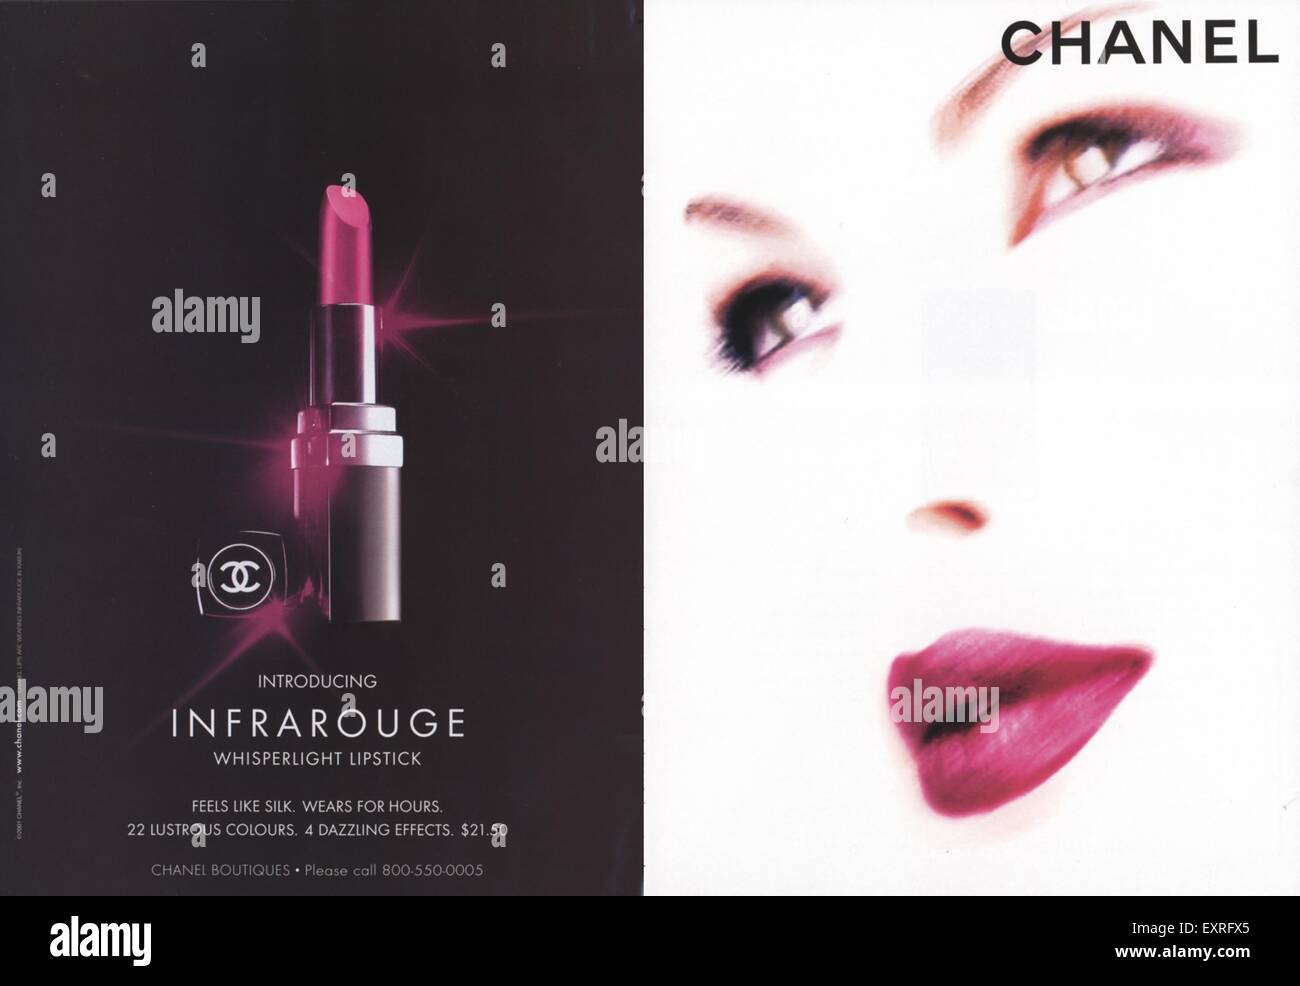 2000s UK Chanel Magazine Advert Stock Photo - Alamy